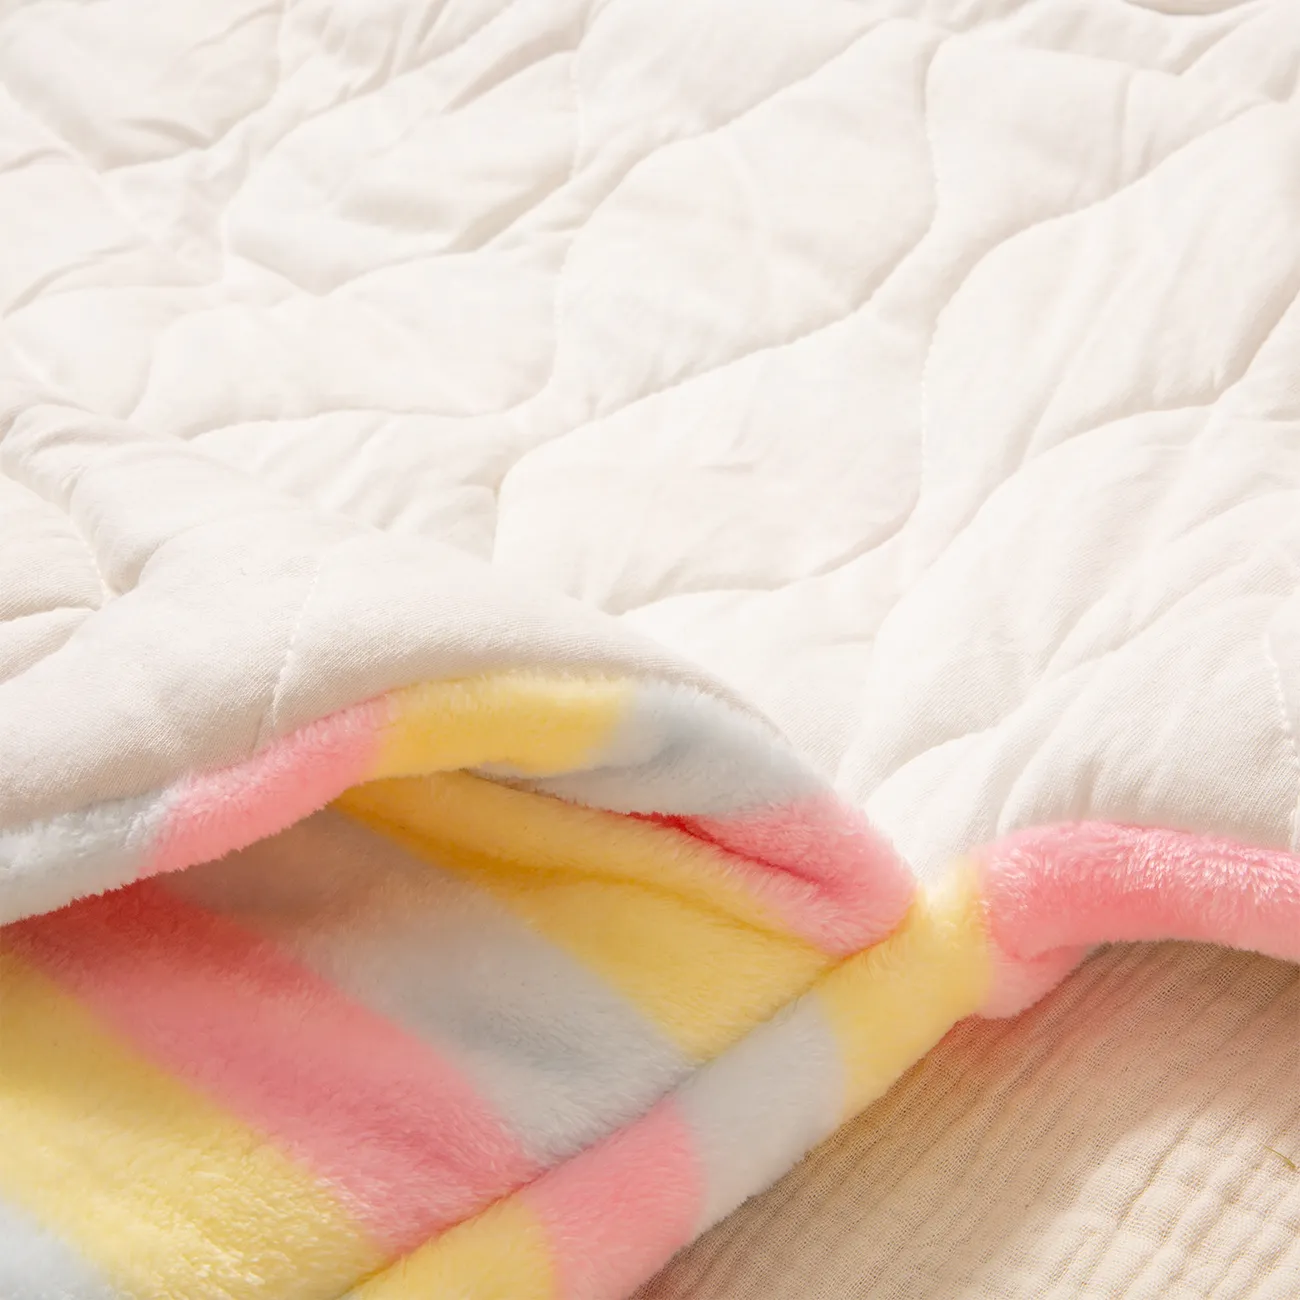 Winter Flannel Newborn Baby Sleeping Bag/Blanket with Cute Rabbit Ear Design Multi-color big image 1